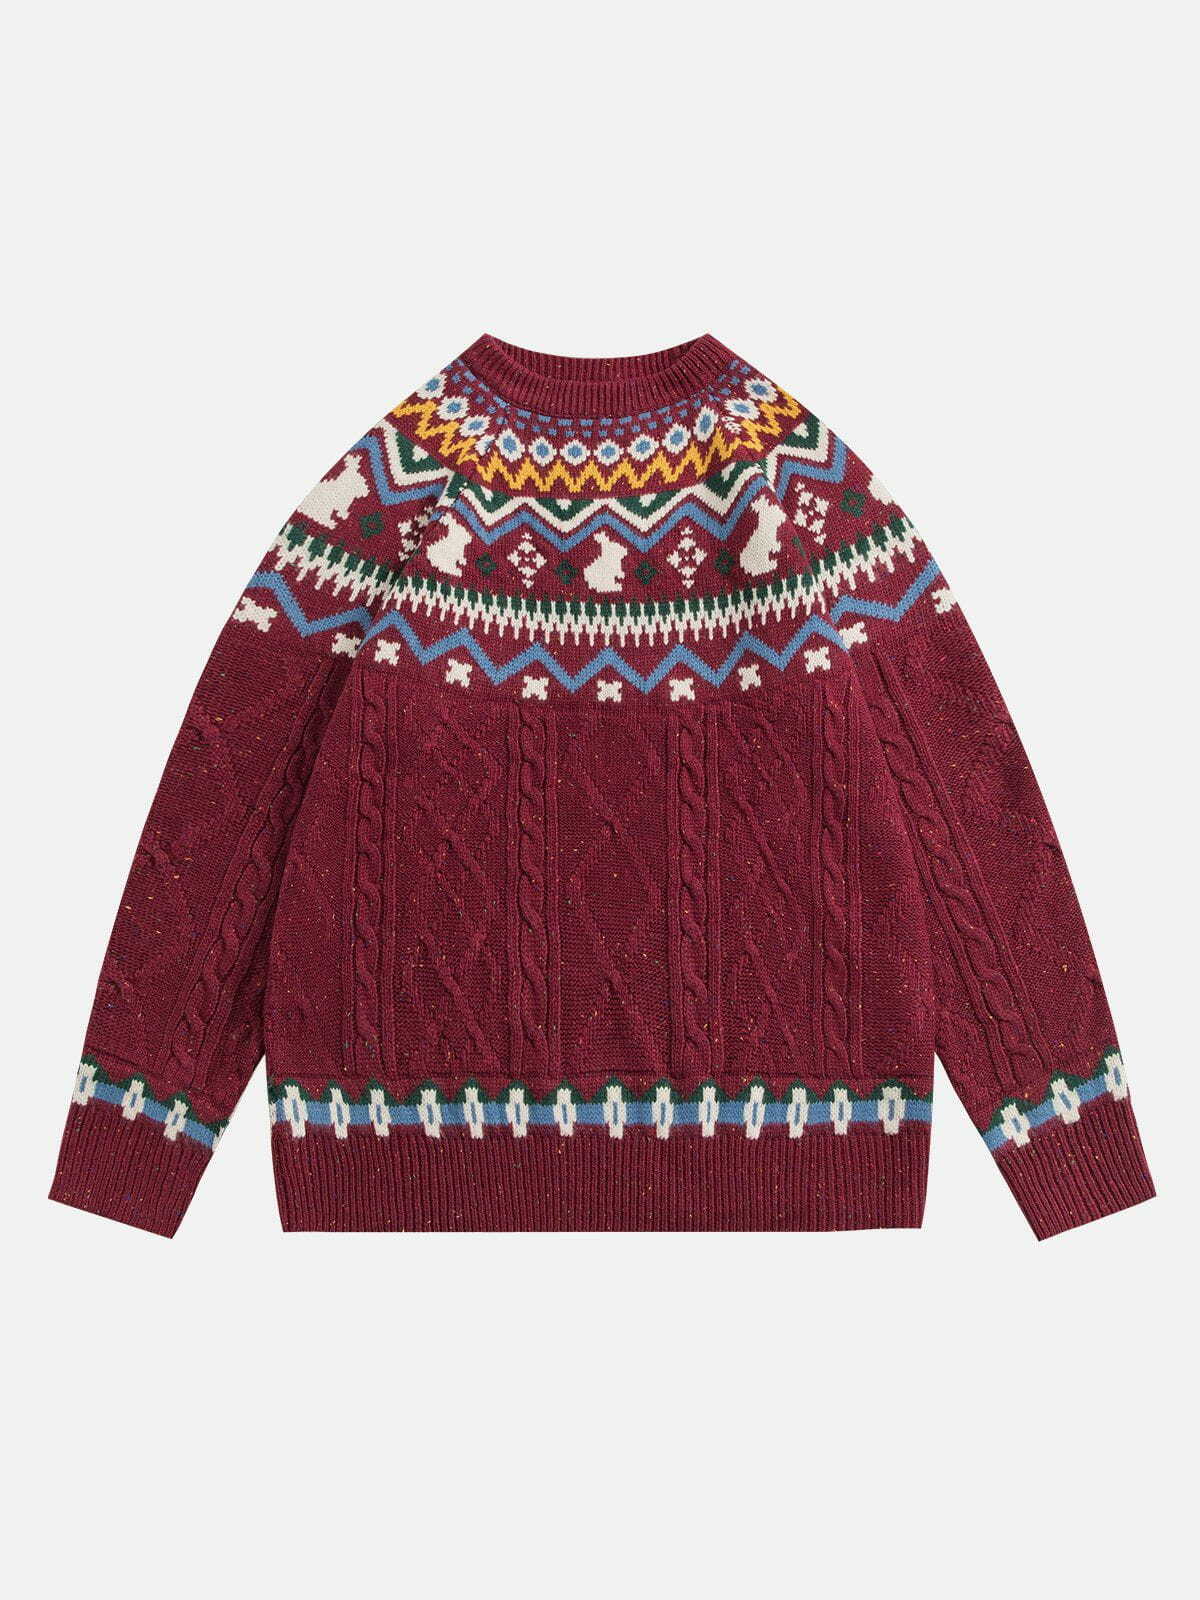 fair isle knit sweater cozy retro charm 2962